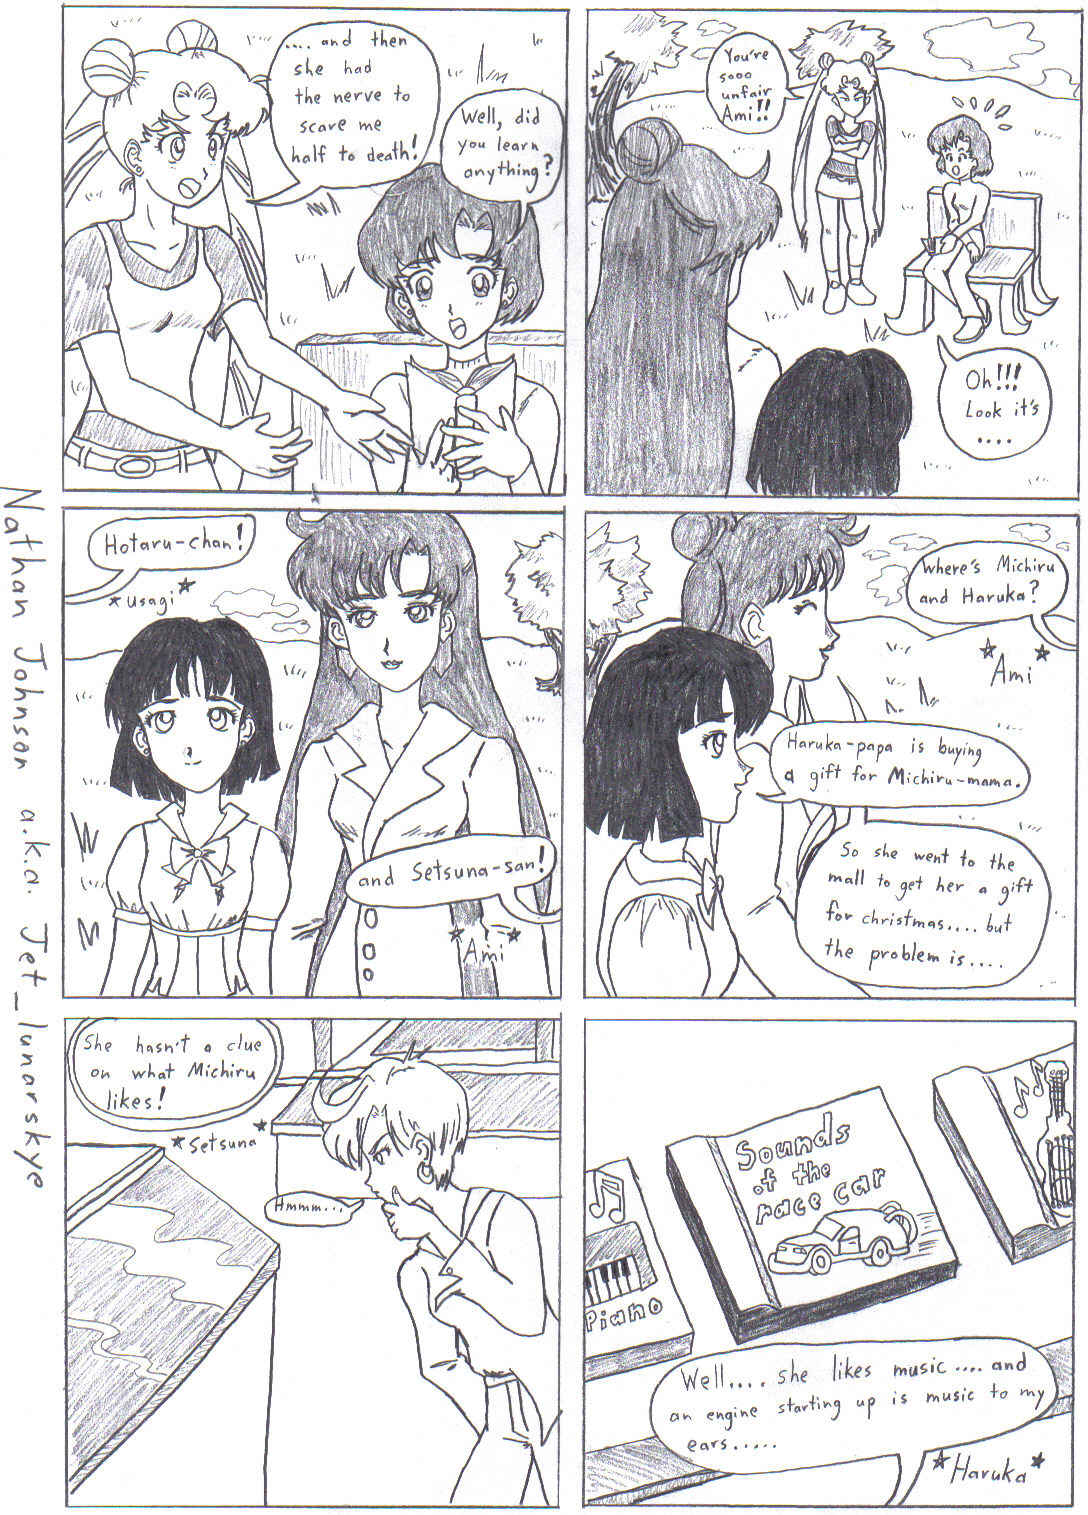 Hikawa Shrine Antics: page 2 mini-manga by Jet_lunarskye